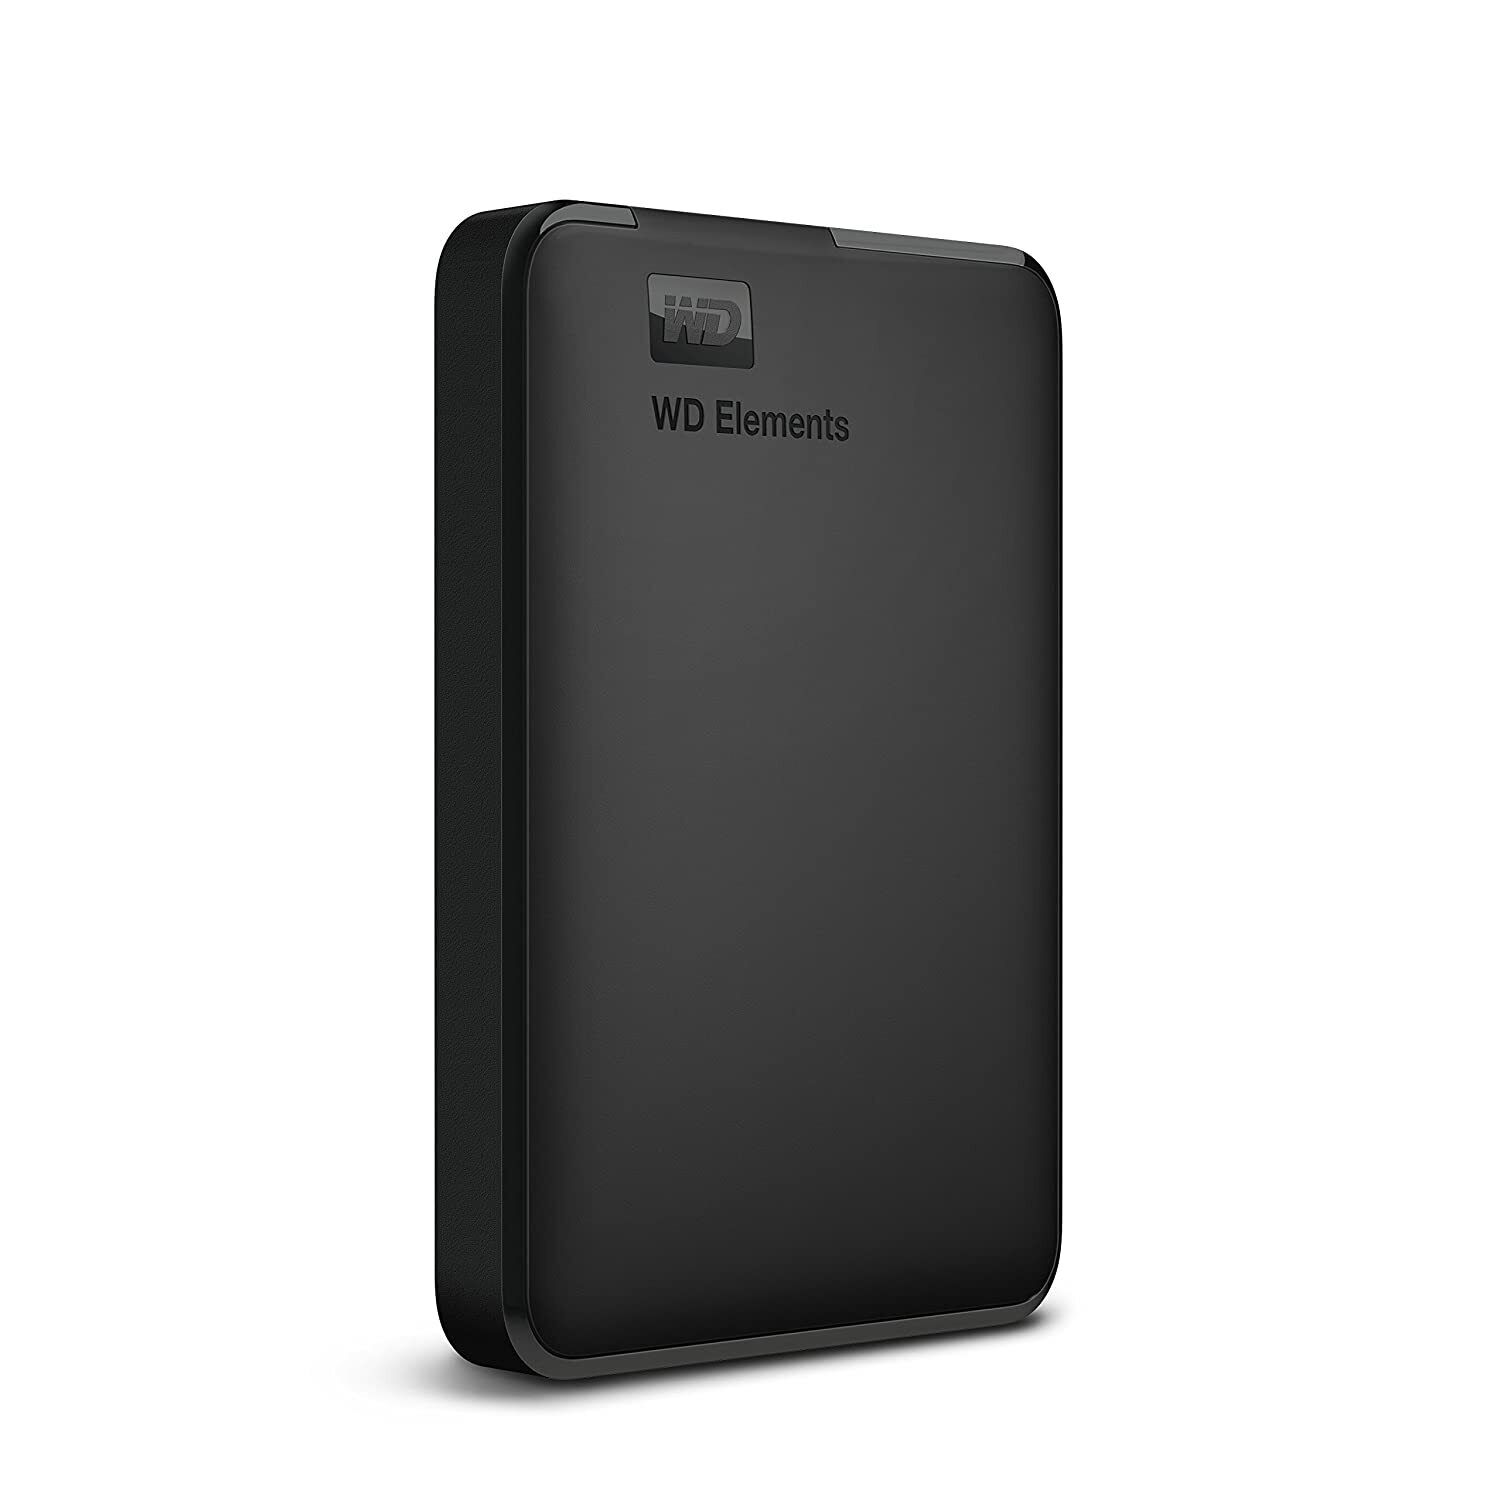 Disco duro externo portátil Western Digital Elements 3 TB, USB 3.0, compatible